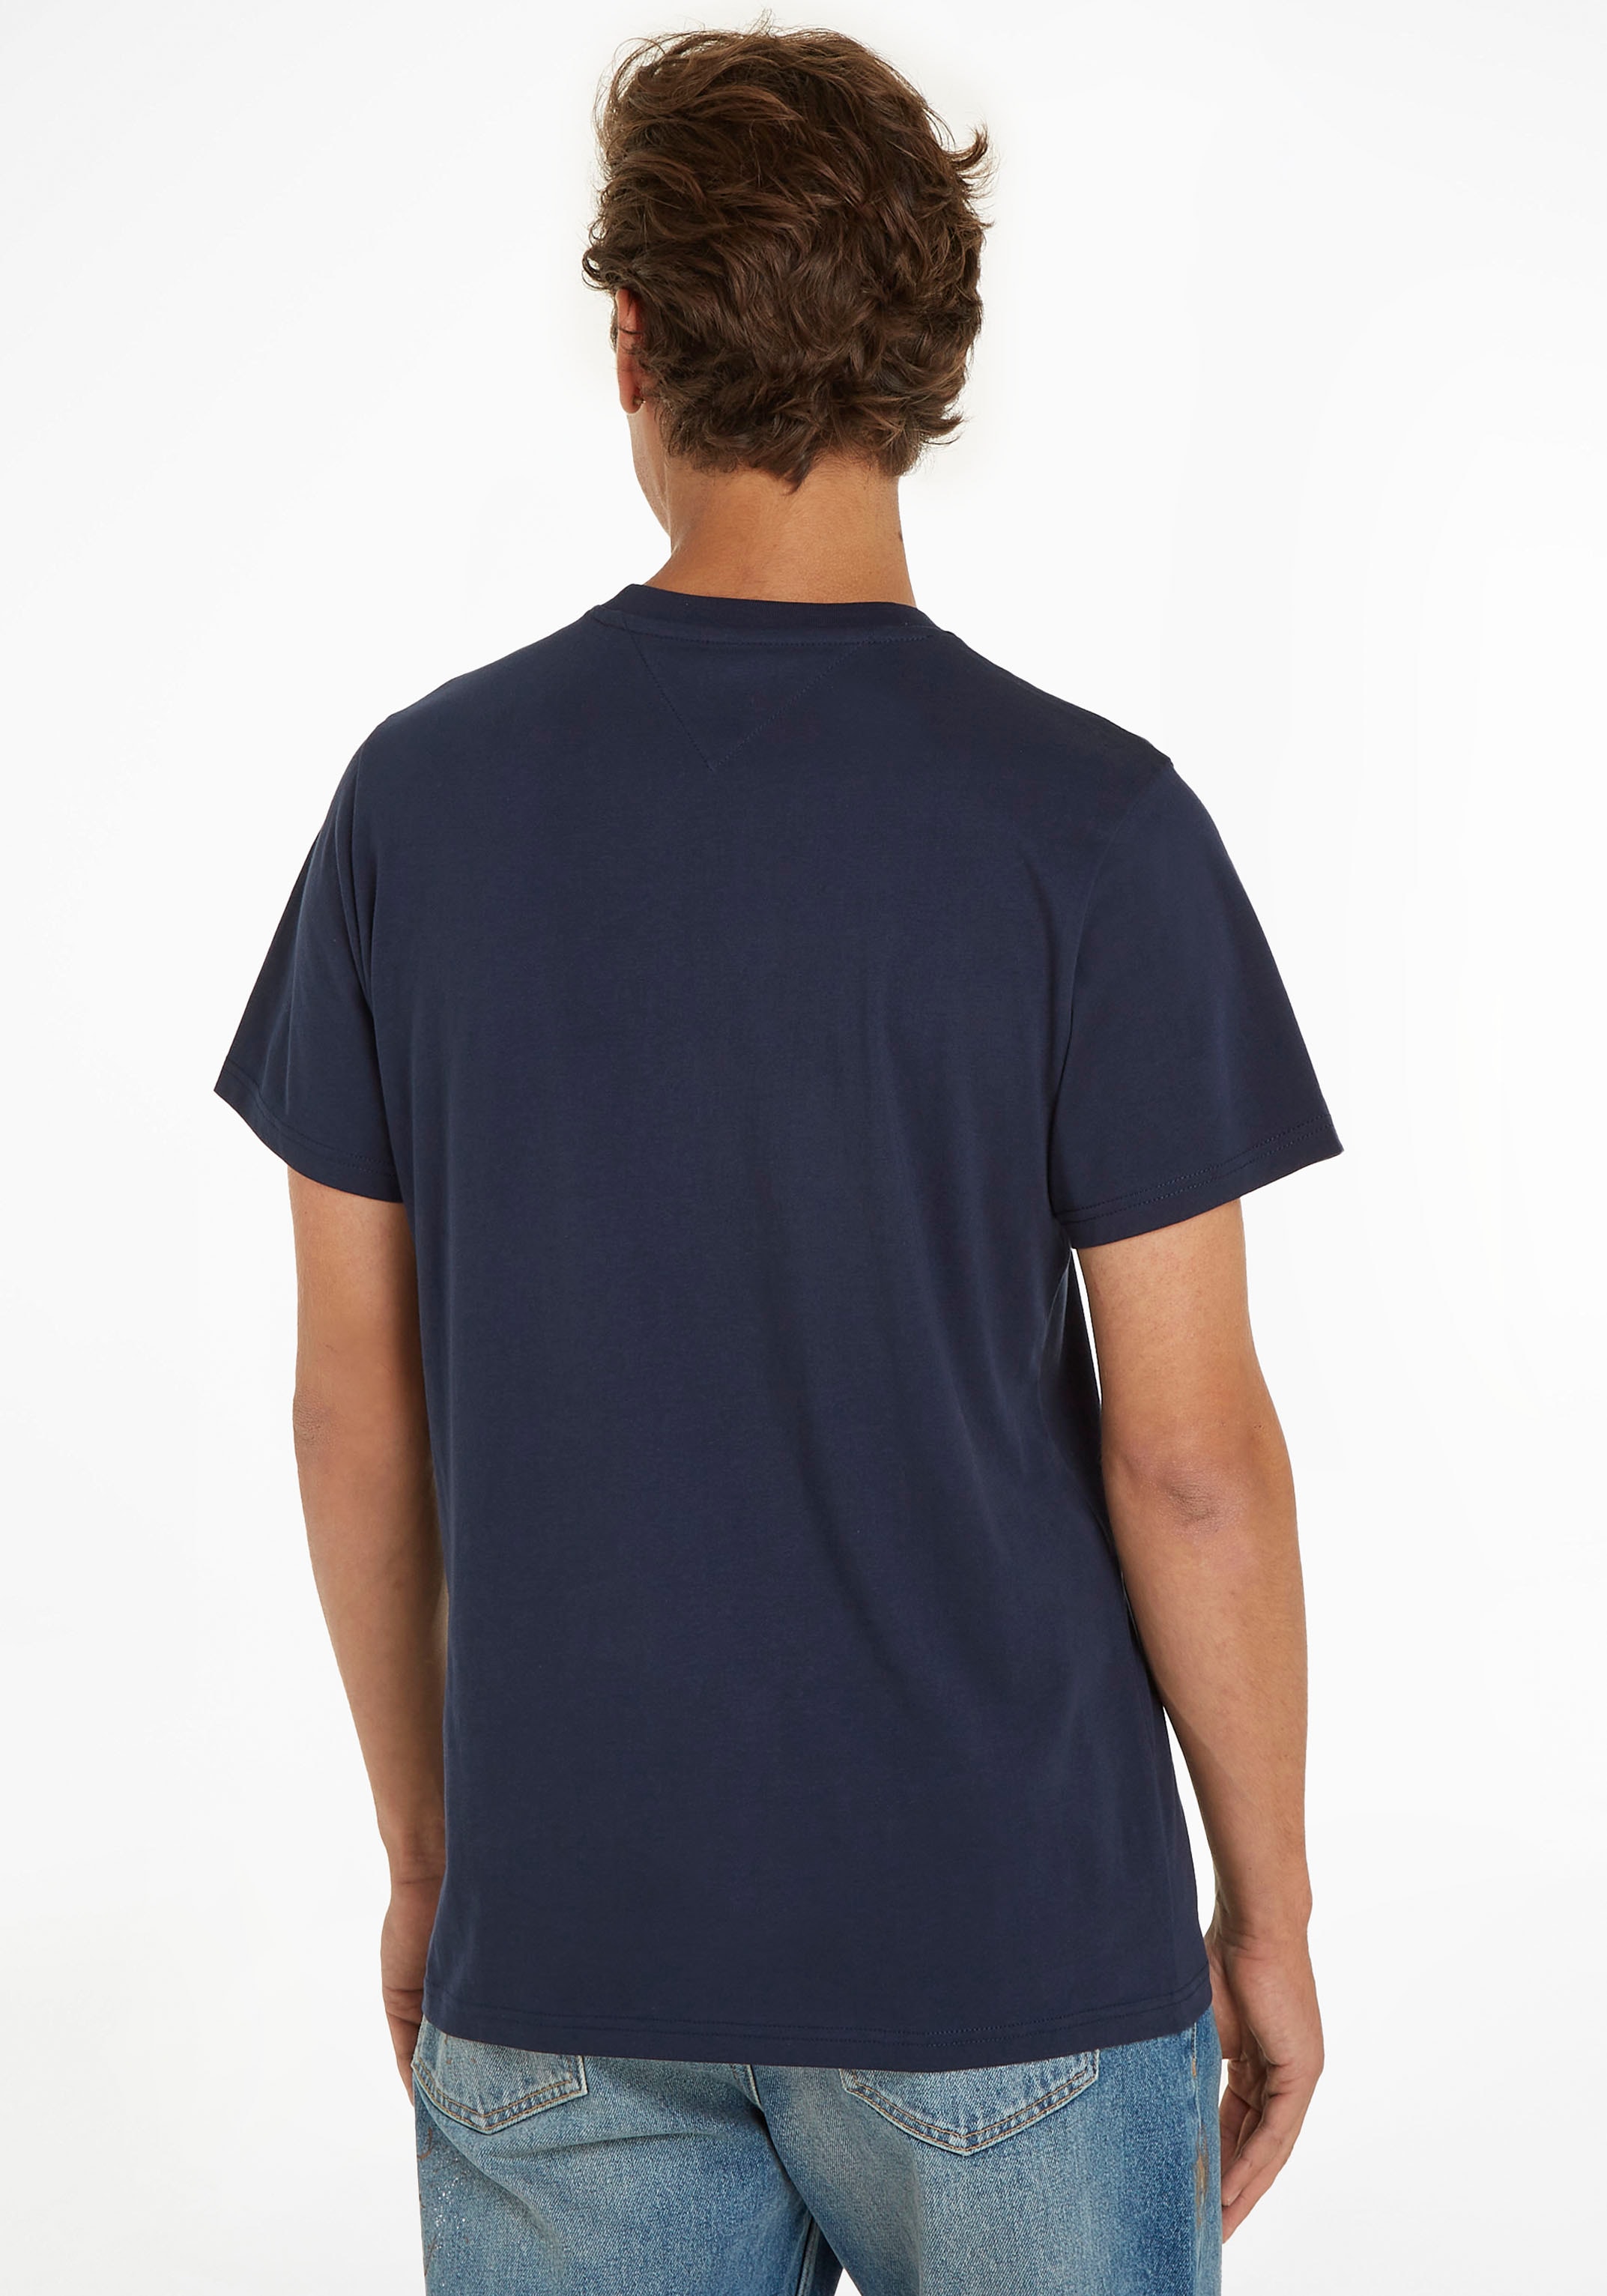 Tommy Jeans Plus T-Shirt »TJM SLIM TJ 85 ENTRY TEE EXT«, Grosse Grössen